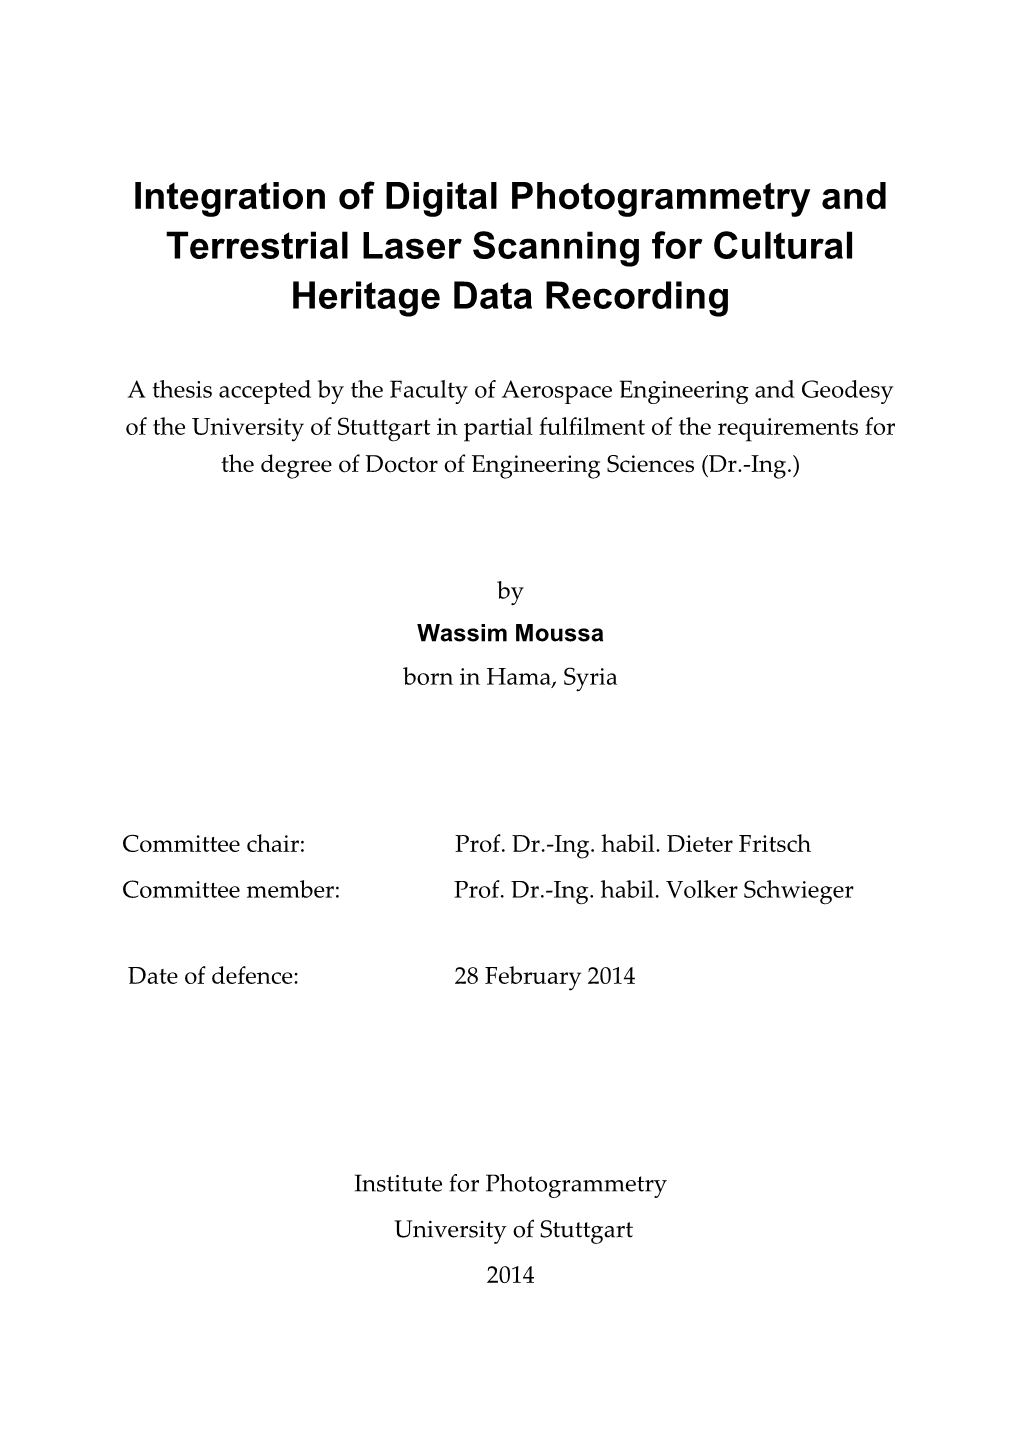 Integration of Digital Photogrammetry and Terrestrial Laser Scanning for Cultural Heritage Data Recording